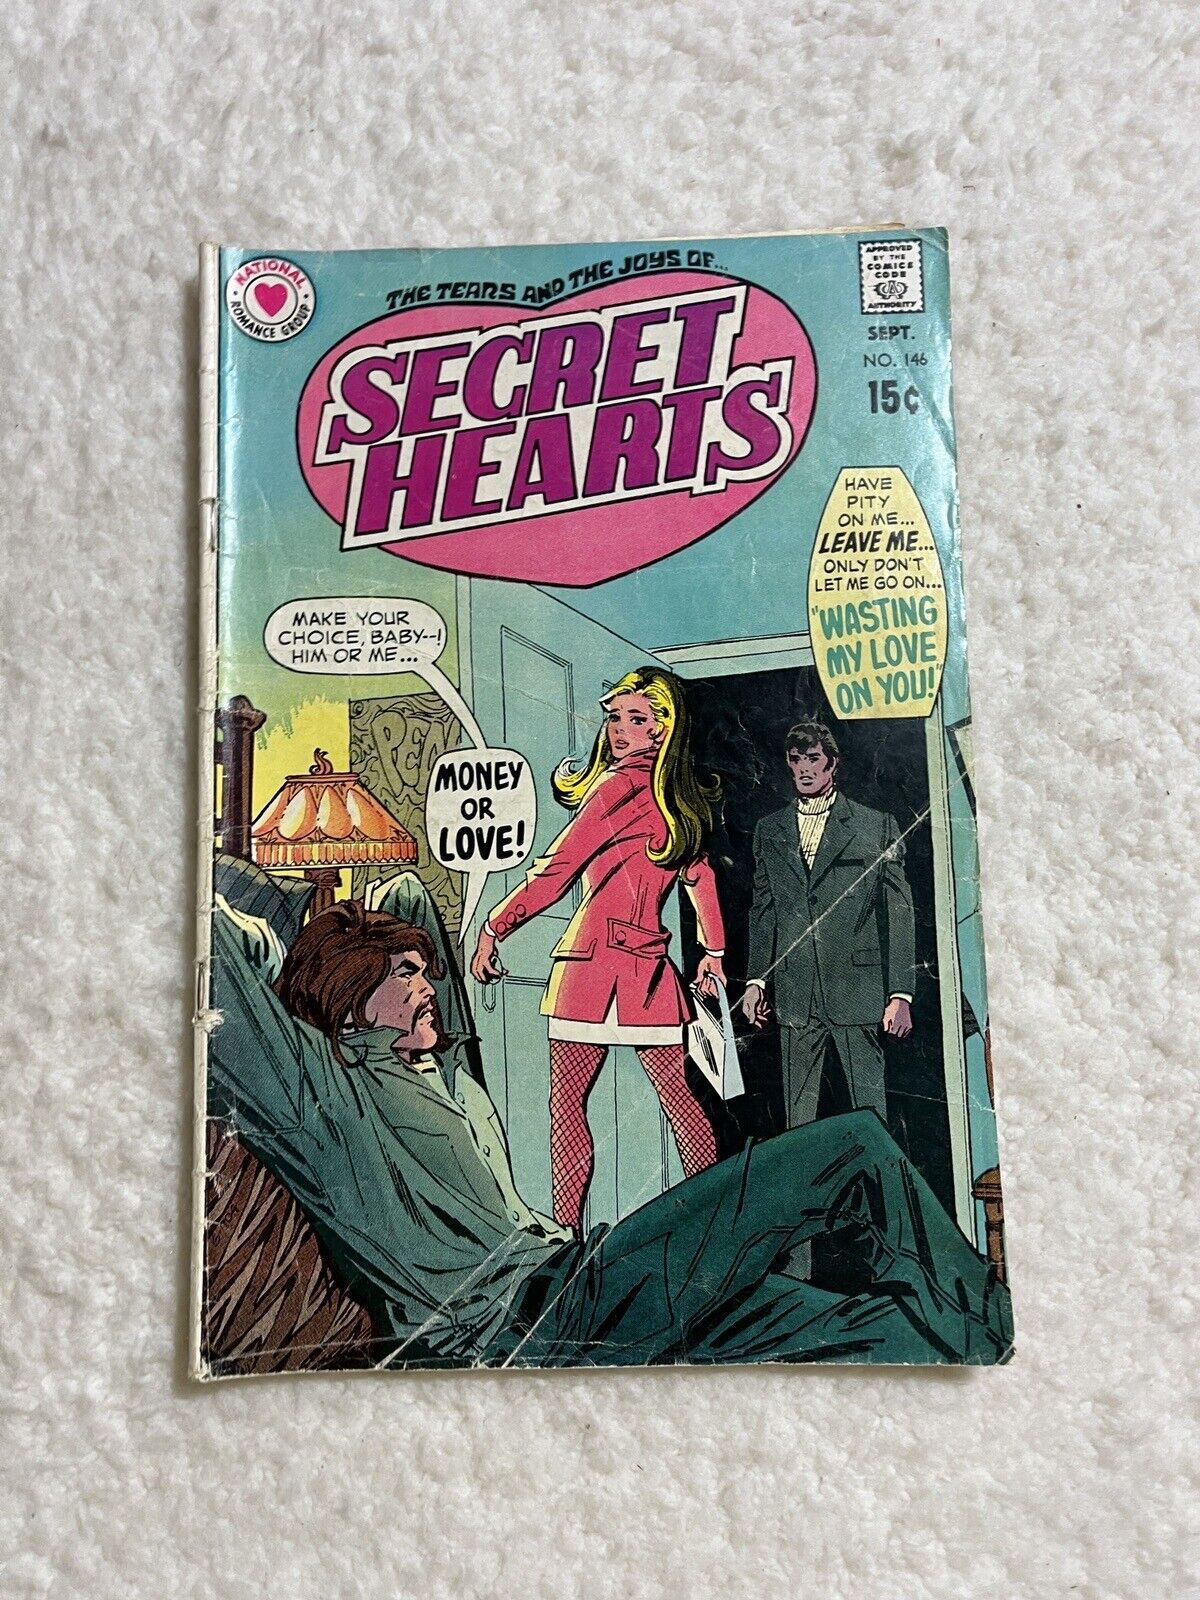 Secret Hearts #146 DC Comics 1970 Bronze Age Romance Book